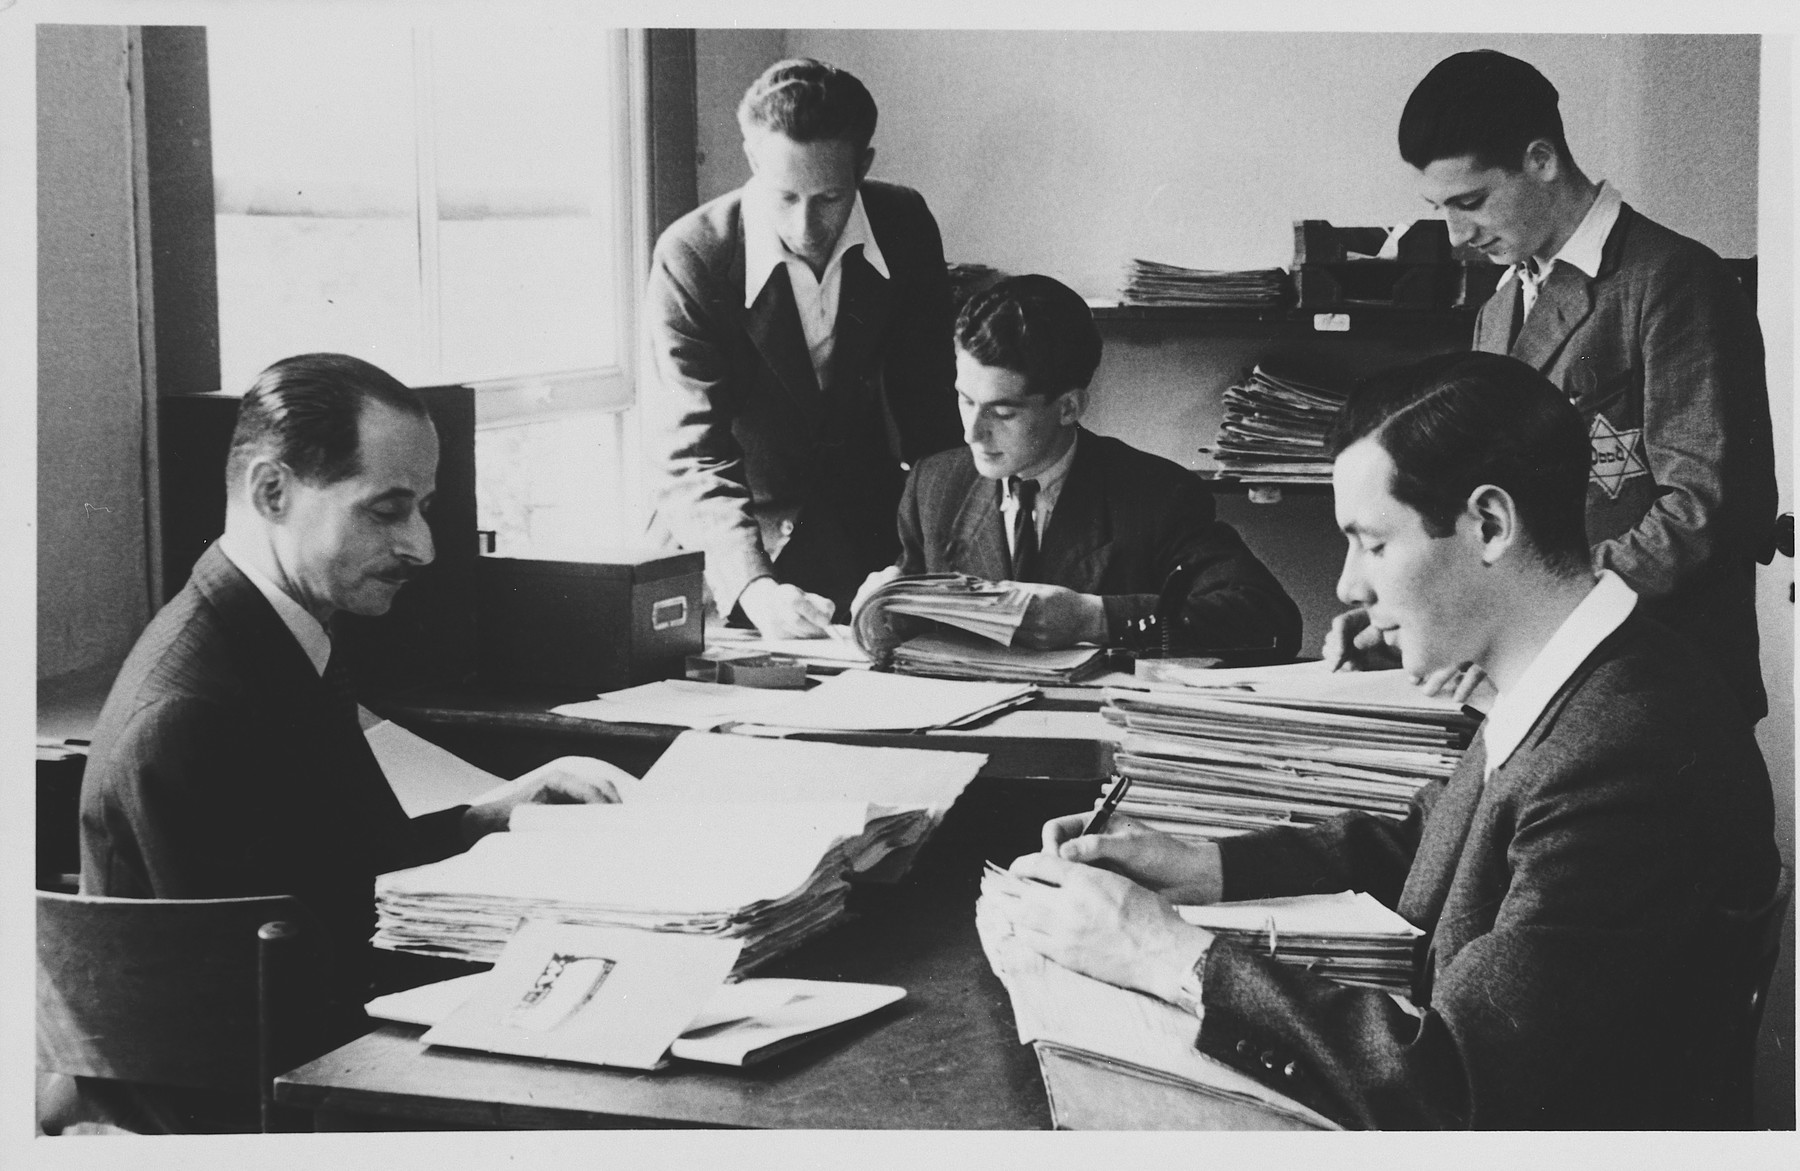 Dutch Jews, some wearing Jewish Stars, work in the newspaper office.

Pictured on the far left is Kurt Zielenziger.